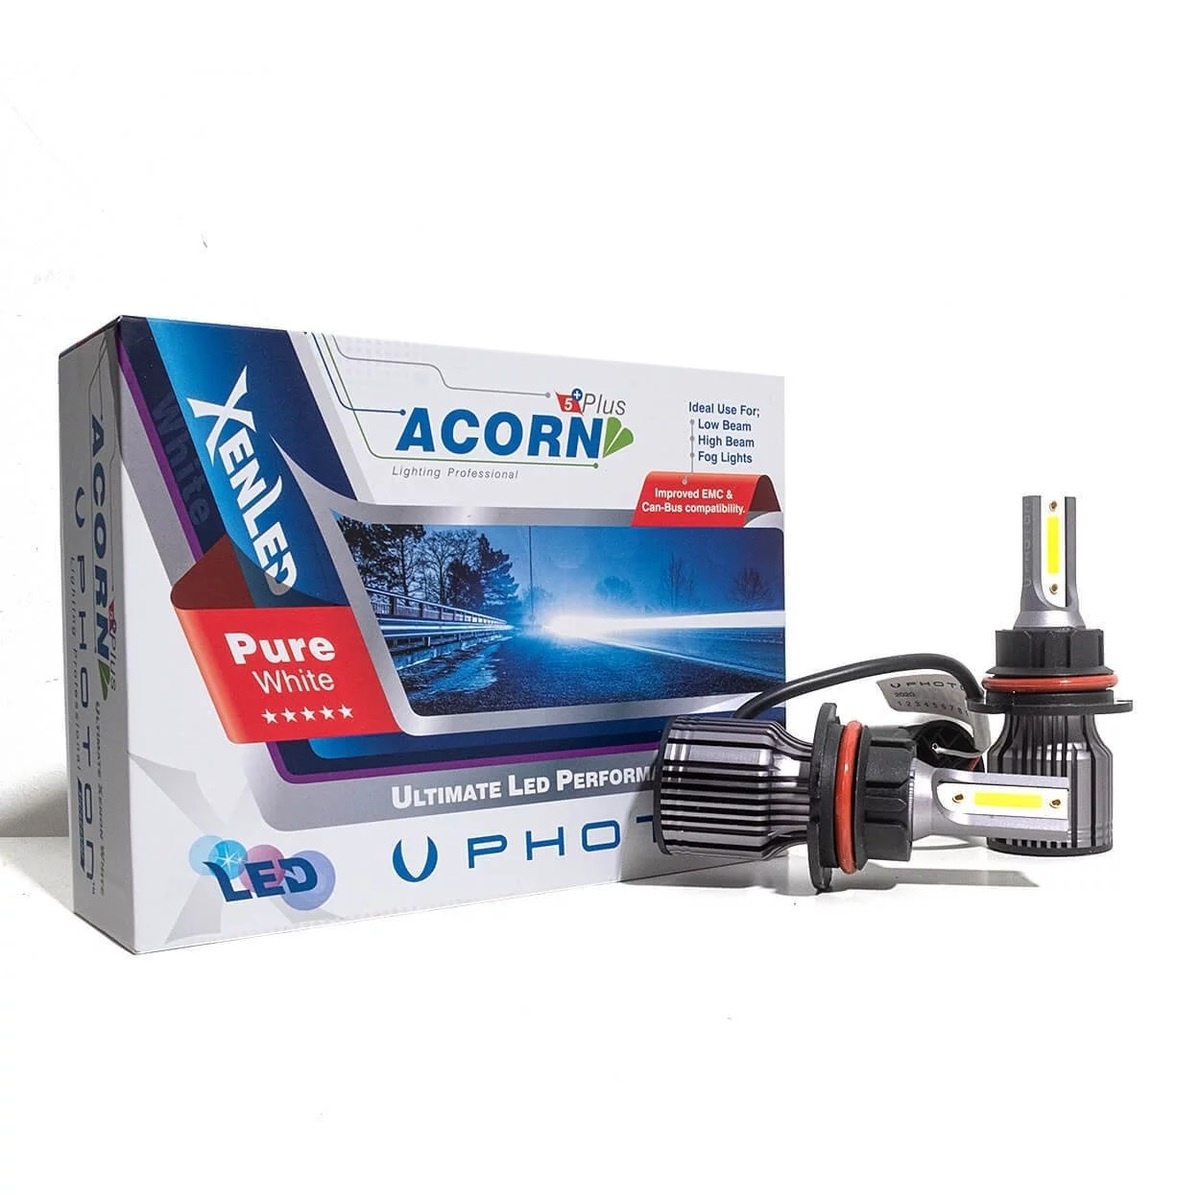 H10 Photon Acorn LED Xenon 6400 Lumen Mini 5Plus